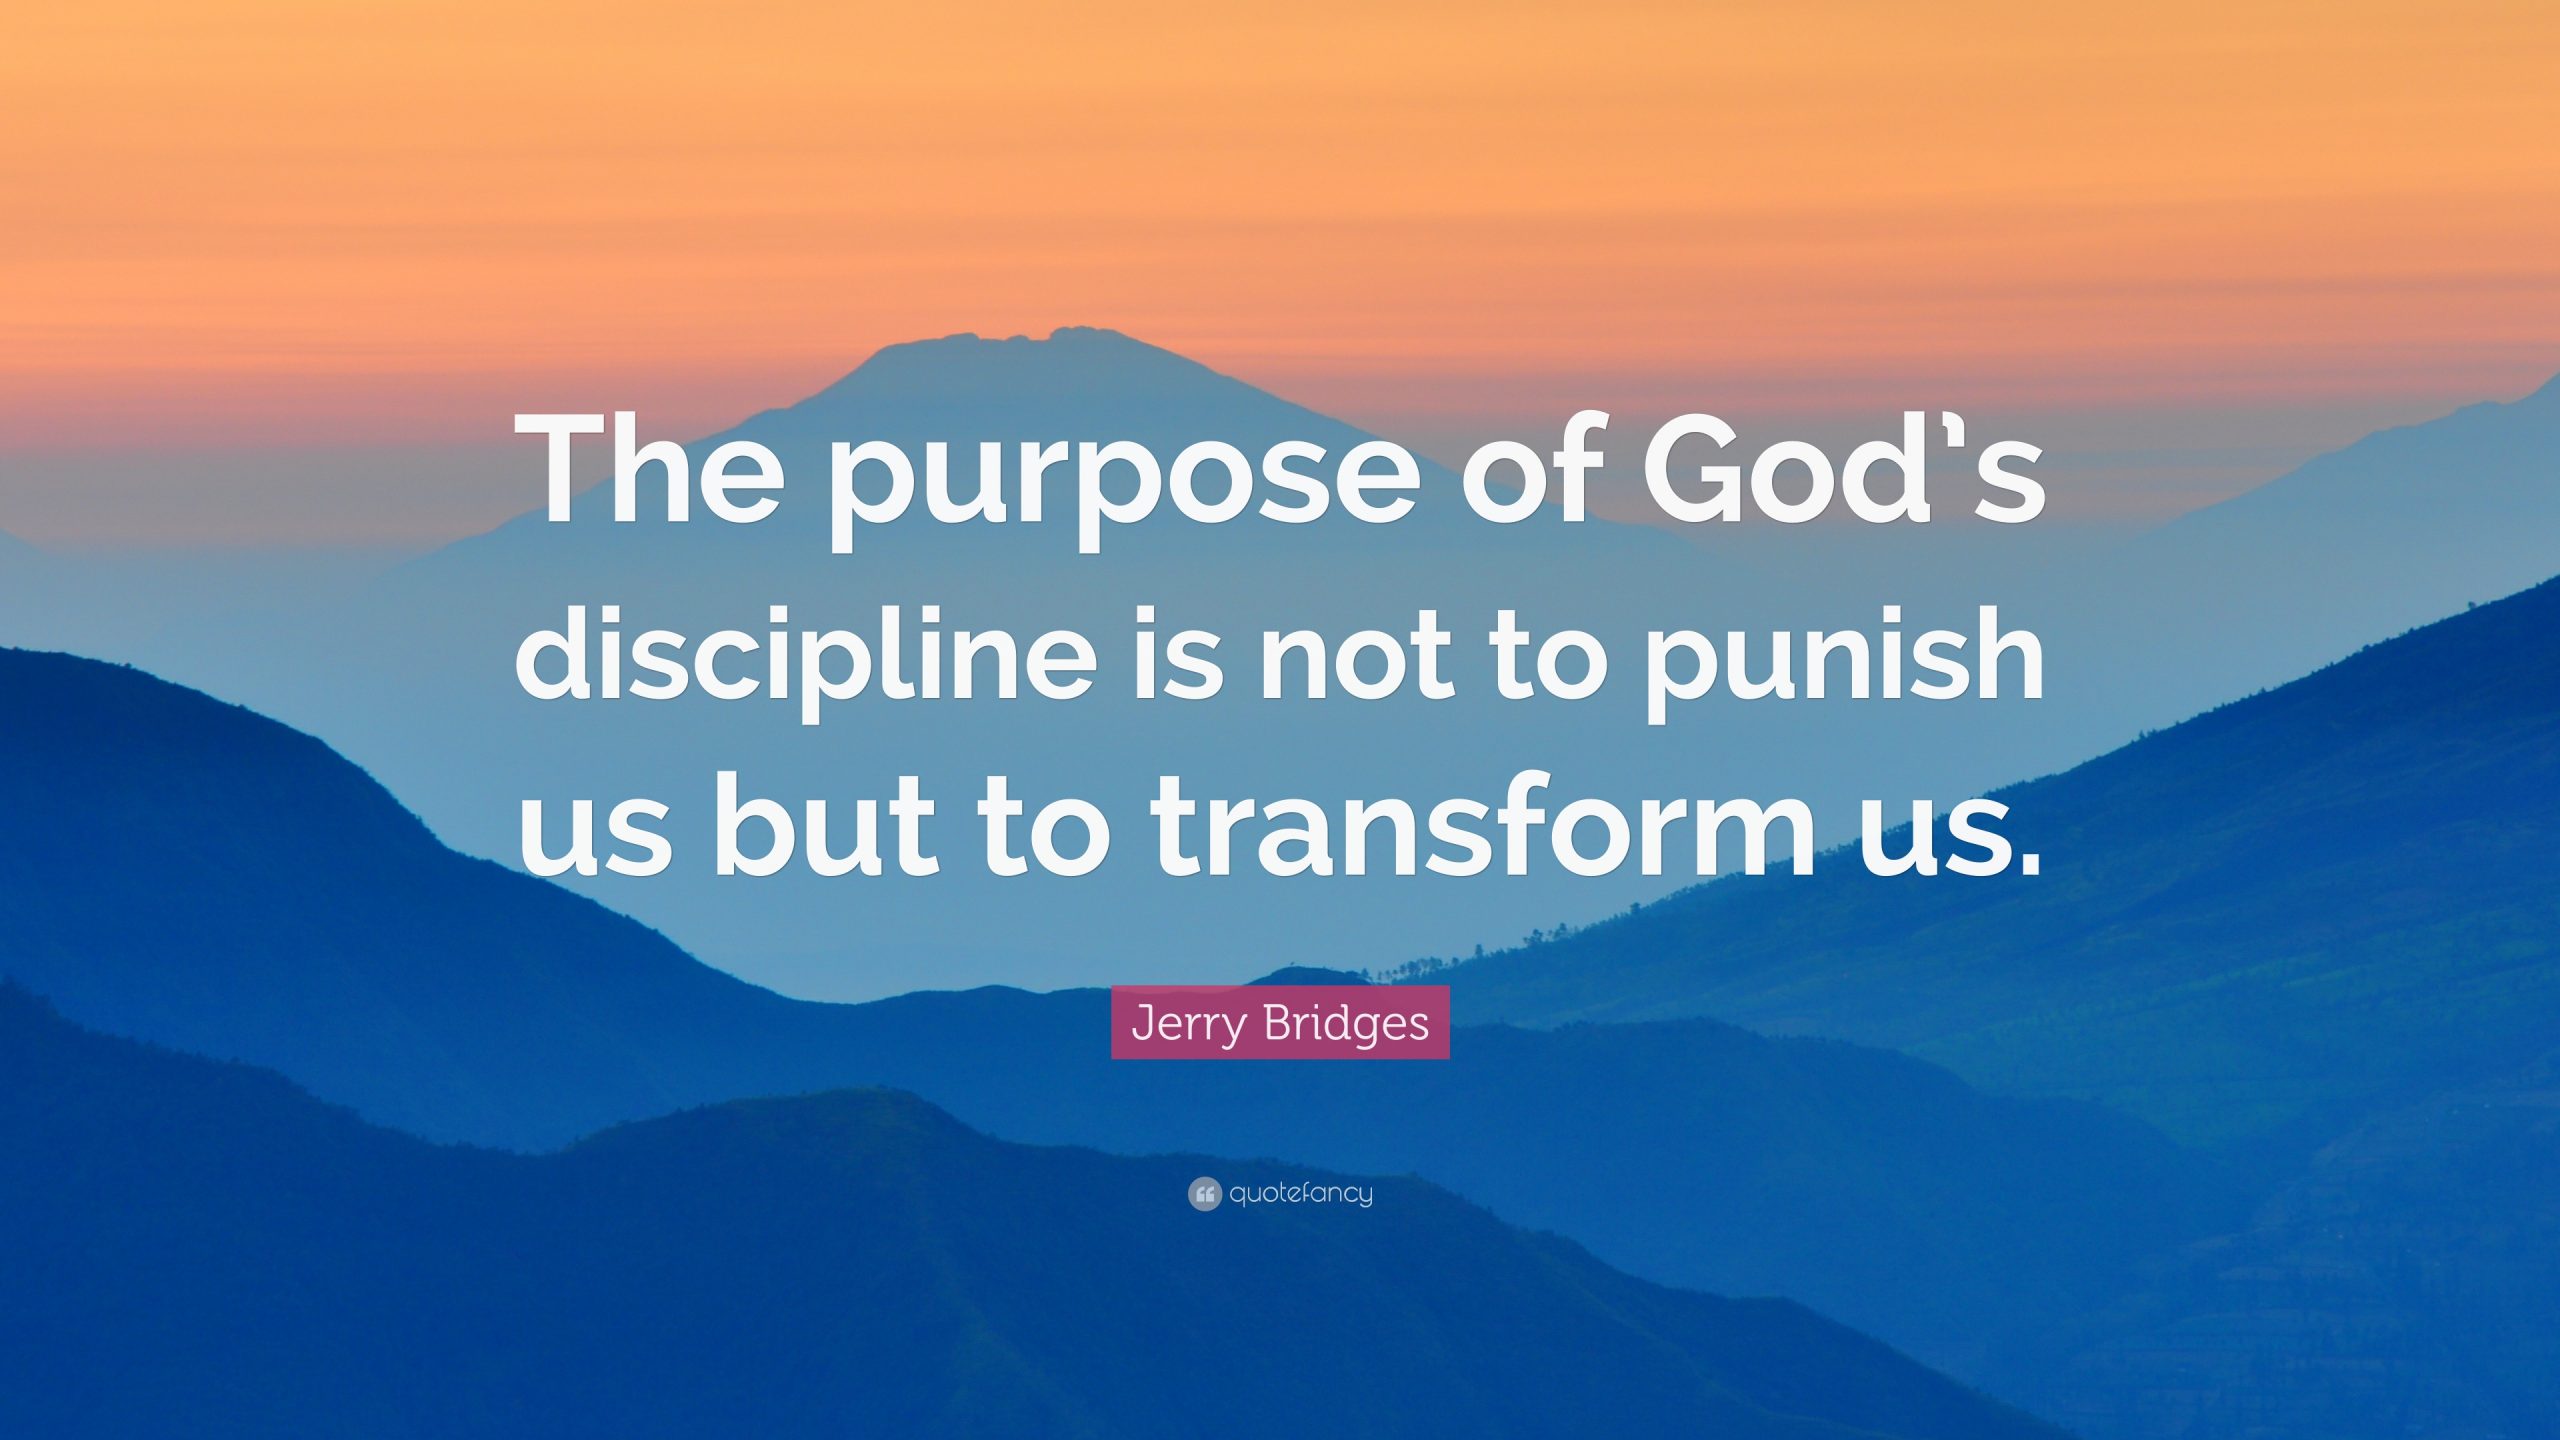 Response to God’s Discipline